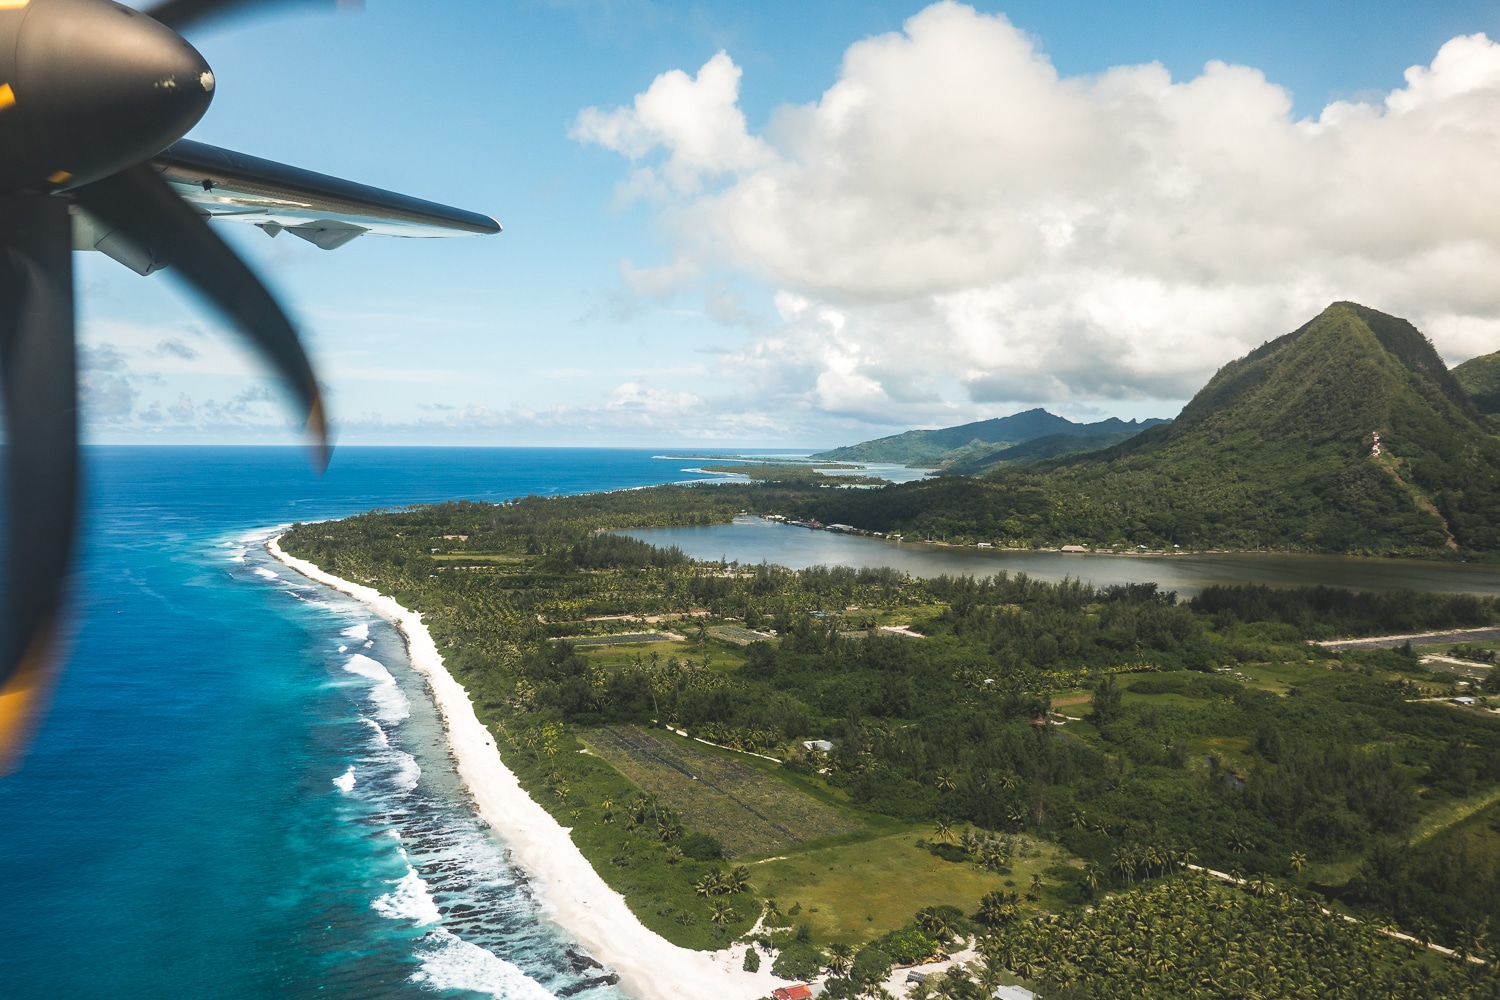 voyage a tahiti, huahine, avio, airtahitinui-que faire à tahiti